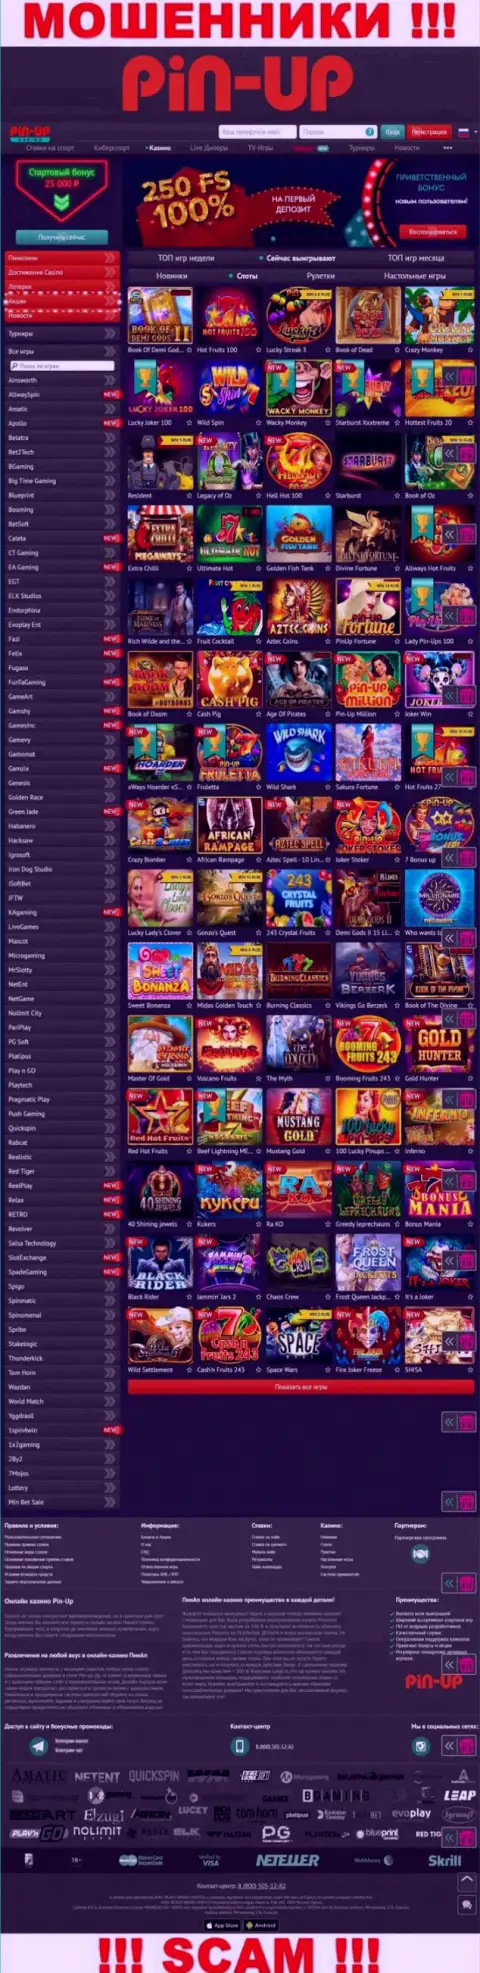 Pin-Up Casino - это официальный web-сервис разводил PinUp Casino